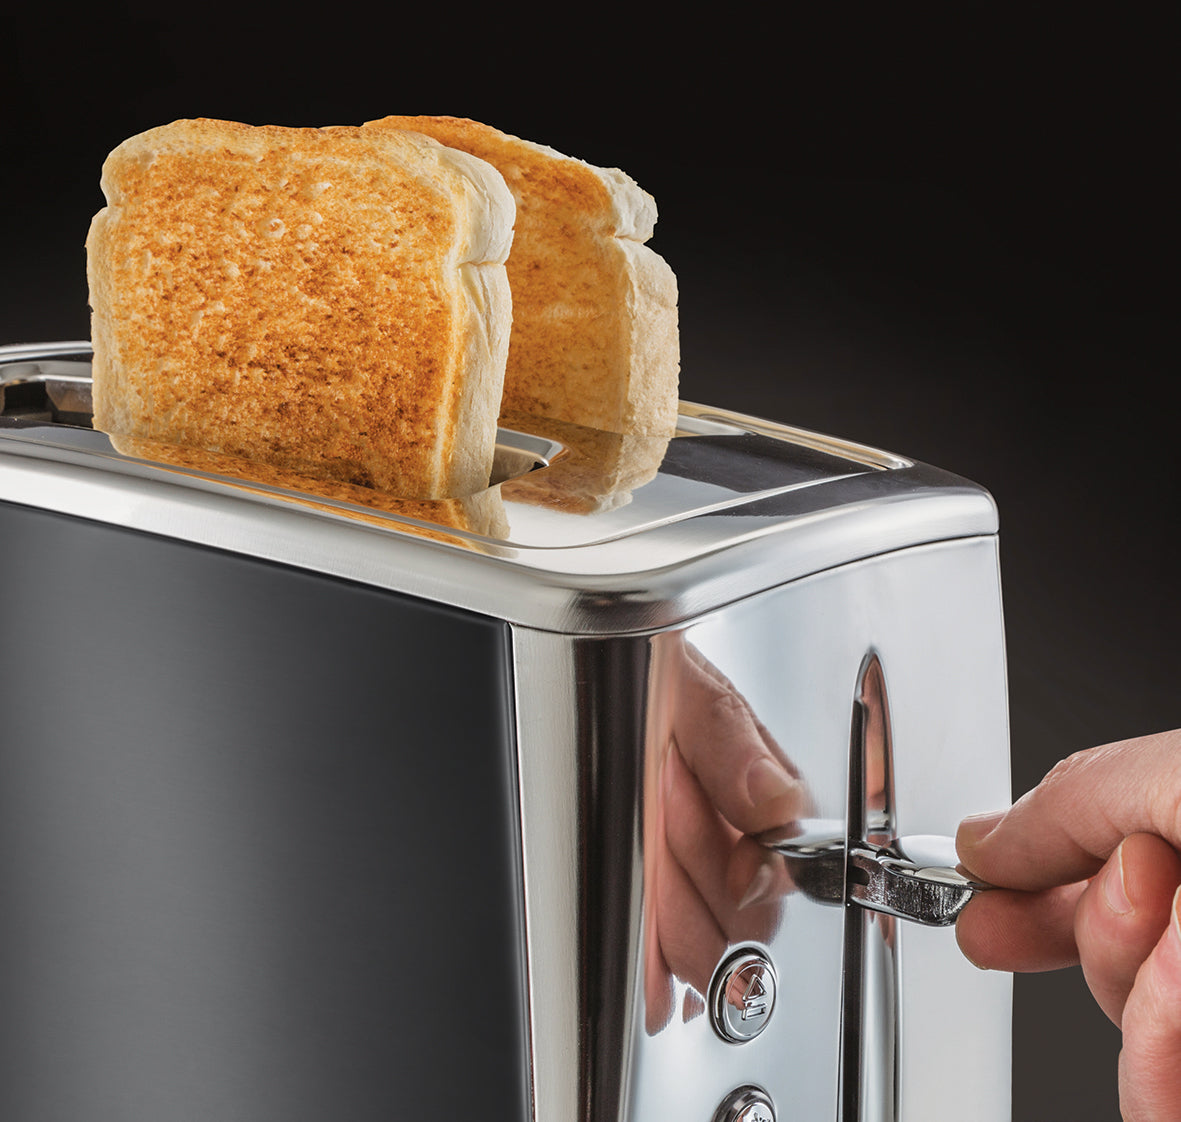 Russell Hobbs Luna Toaster 2 Slice 1500w